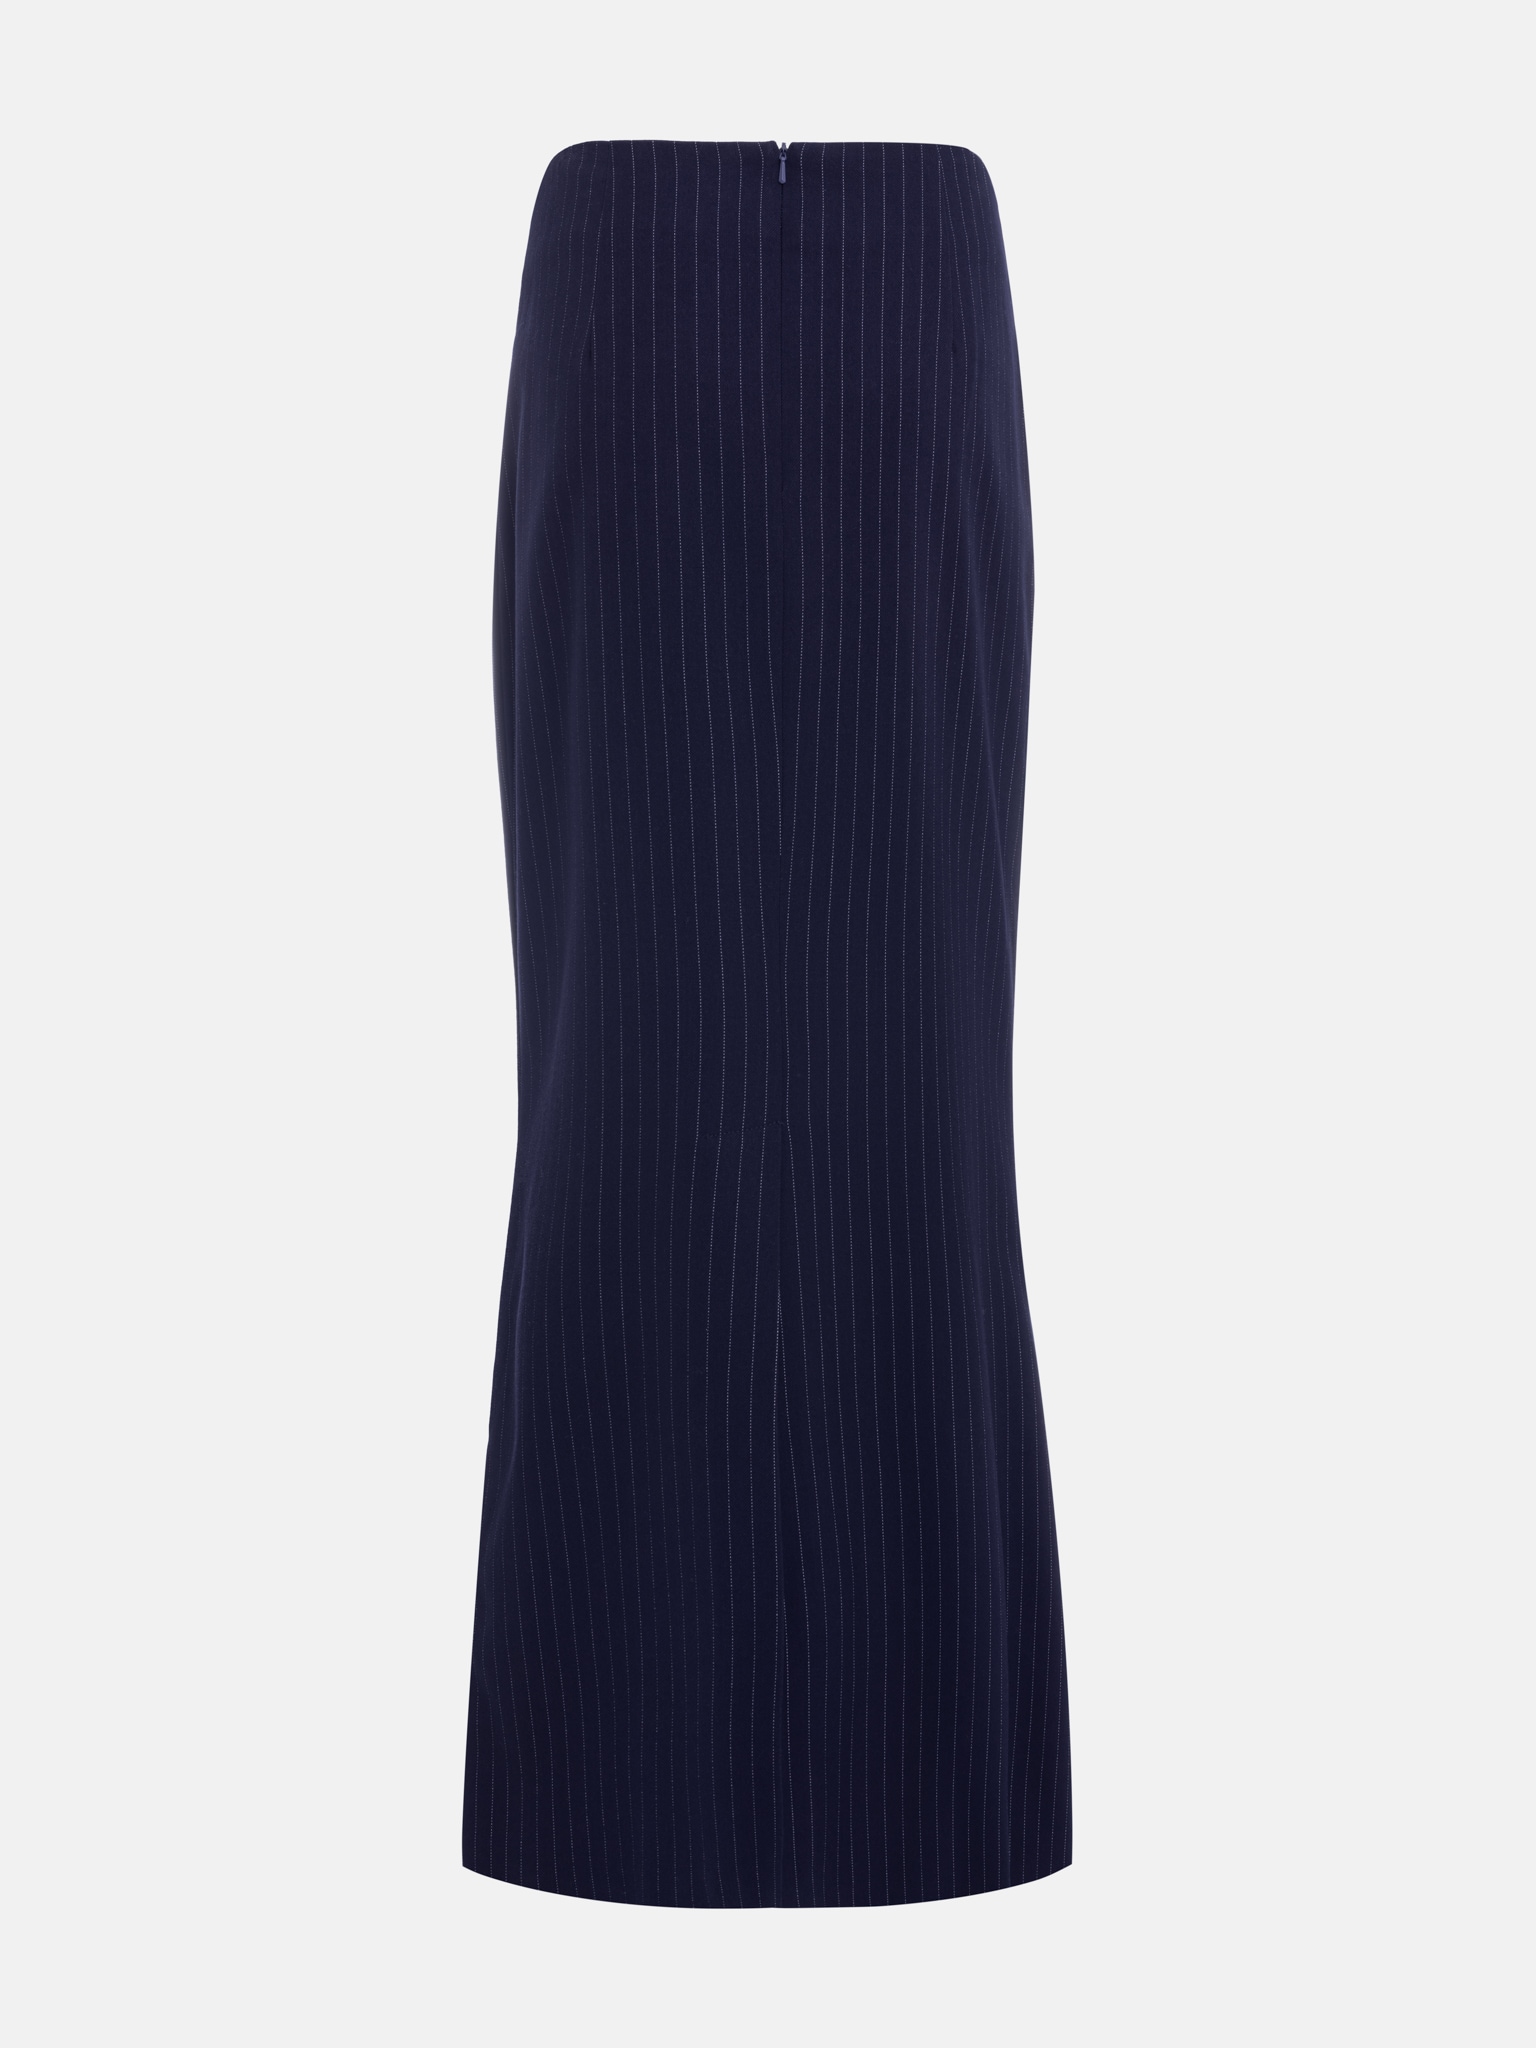 Maxi skirt with fine stripes :: LICHI - Online fashion store